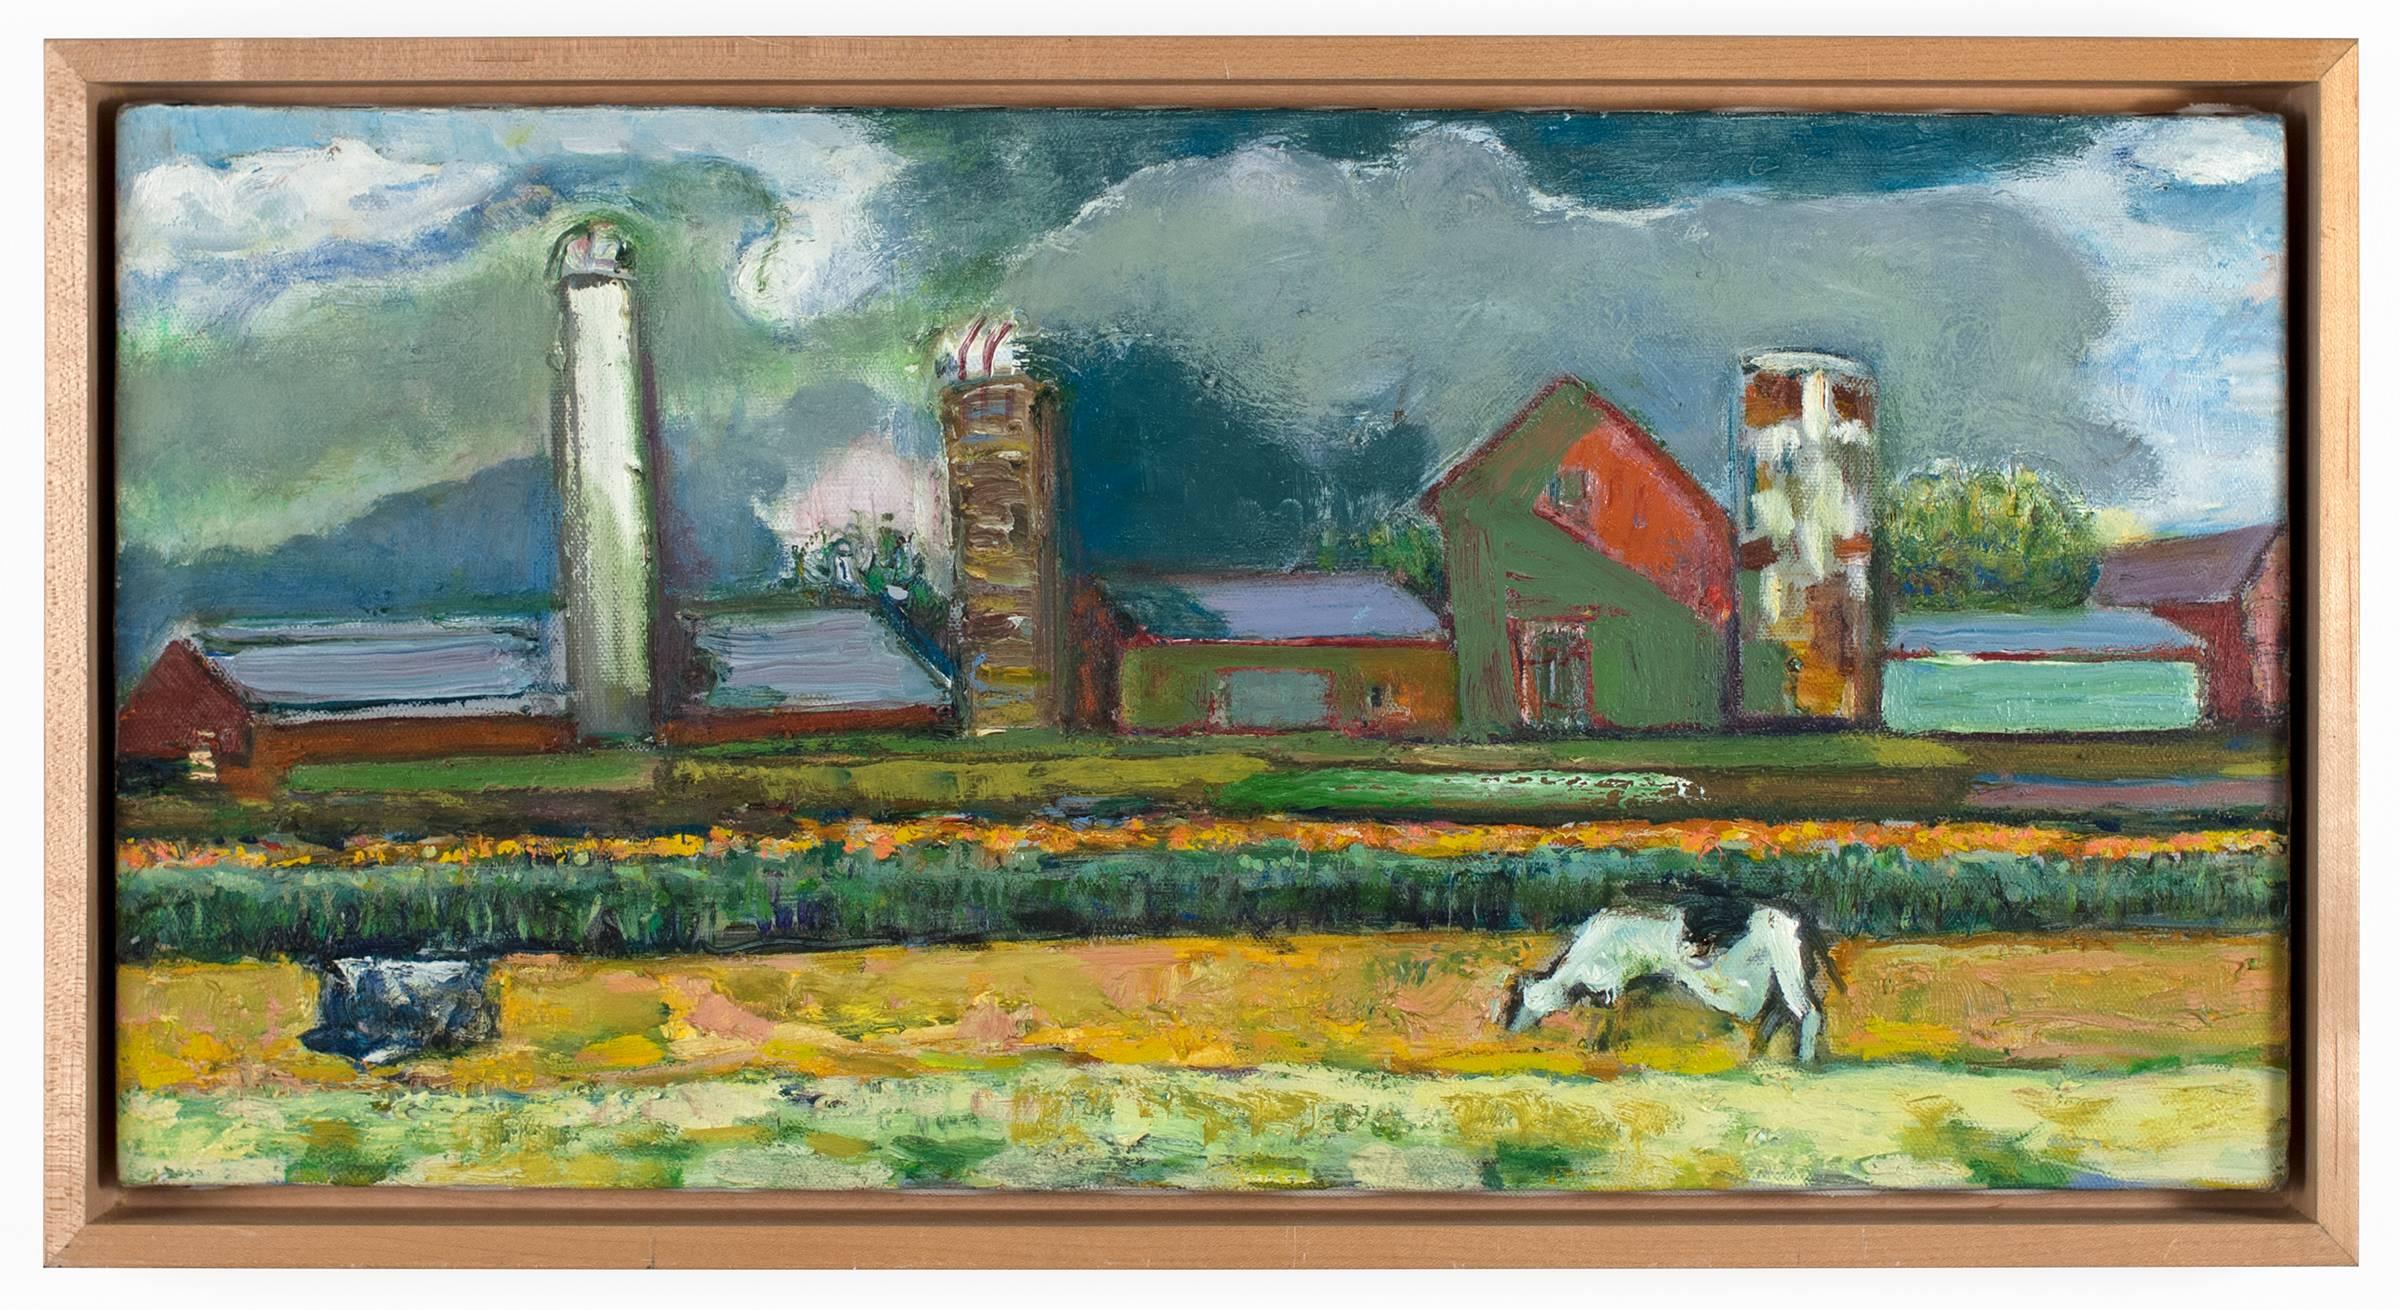 Bernard Chaet Landscape Painting - The Farm